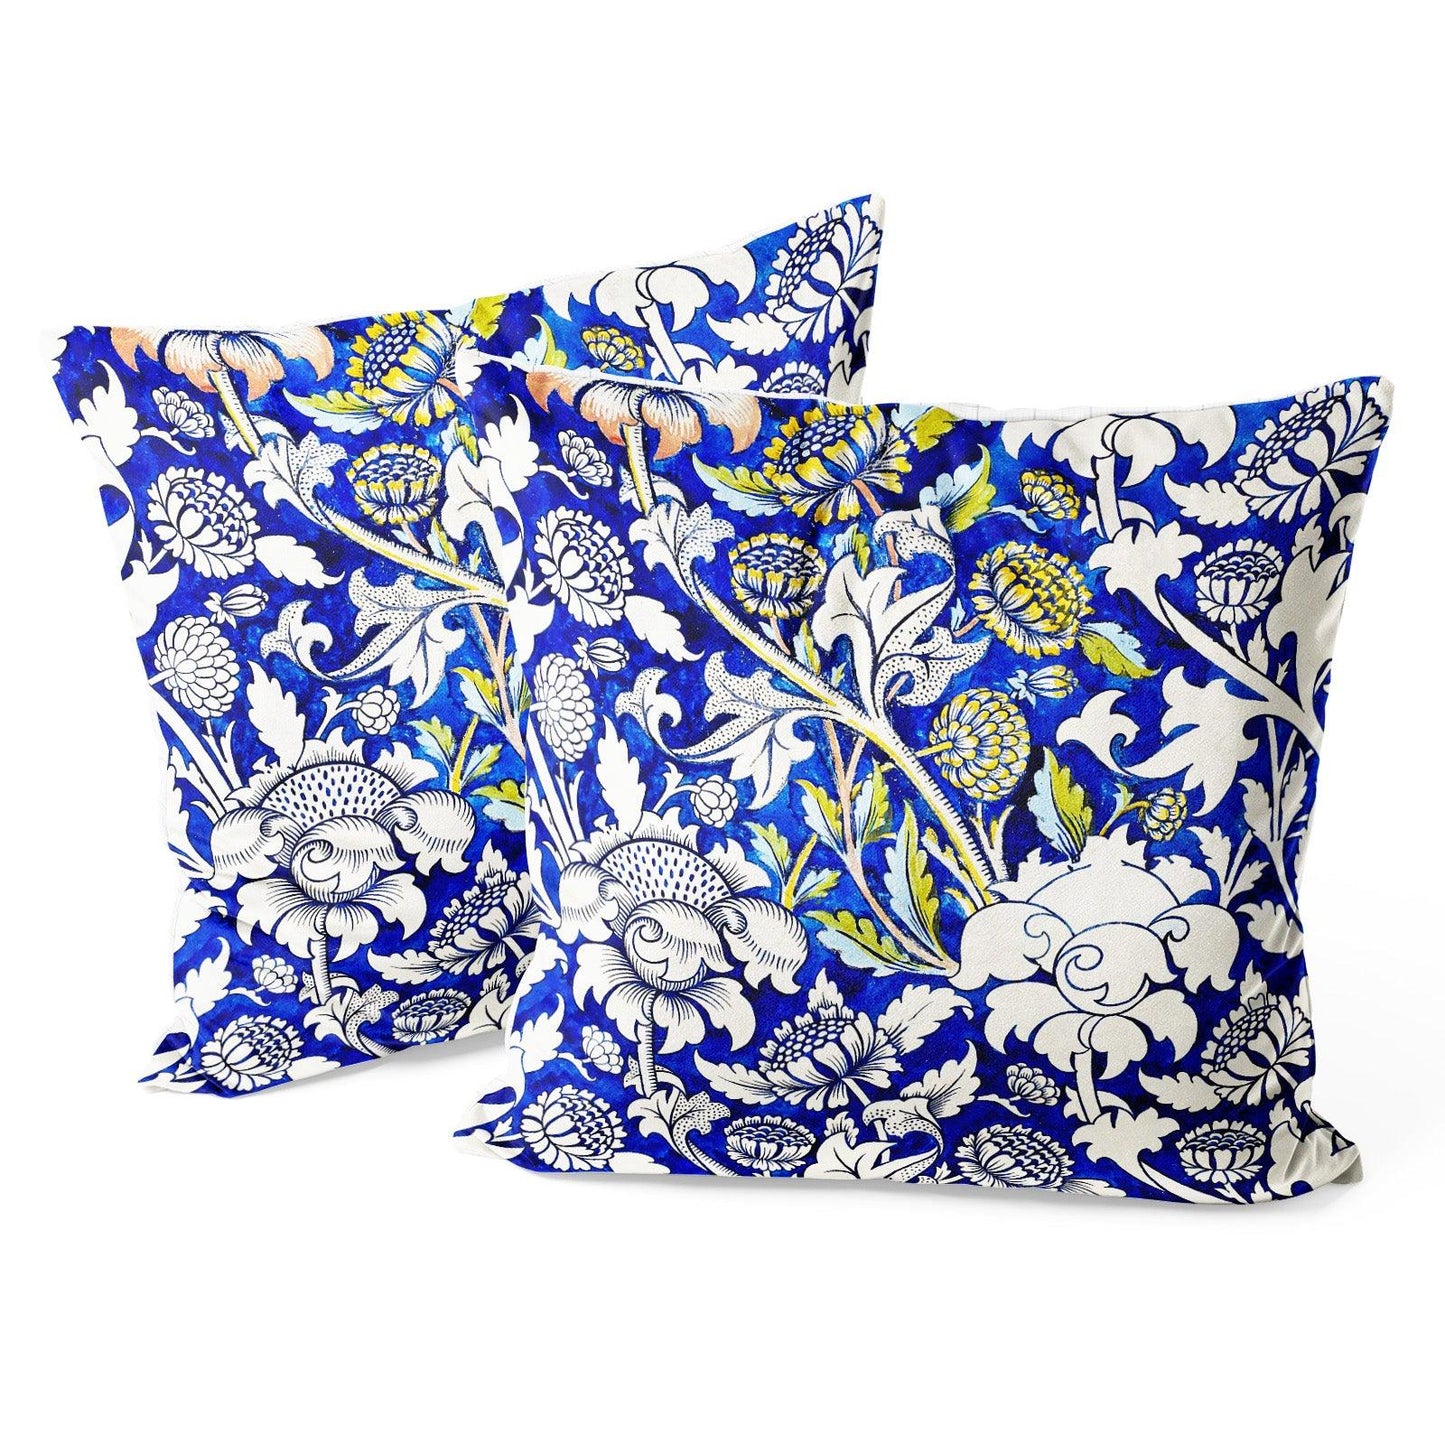 Art Flower Throw Pillow Covers Pack of 2 18x18 Inch (Wild Tulip by William Morris) - Berkin Arts